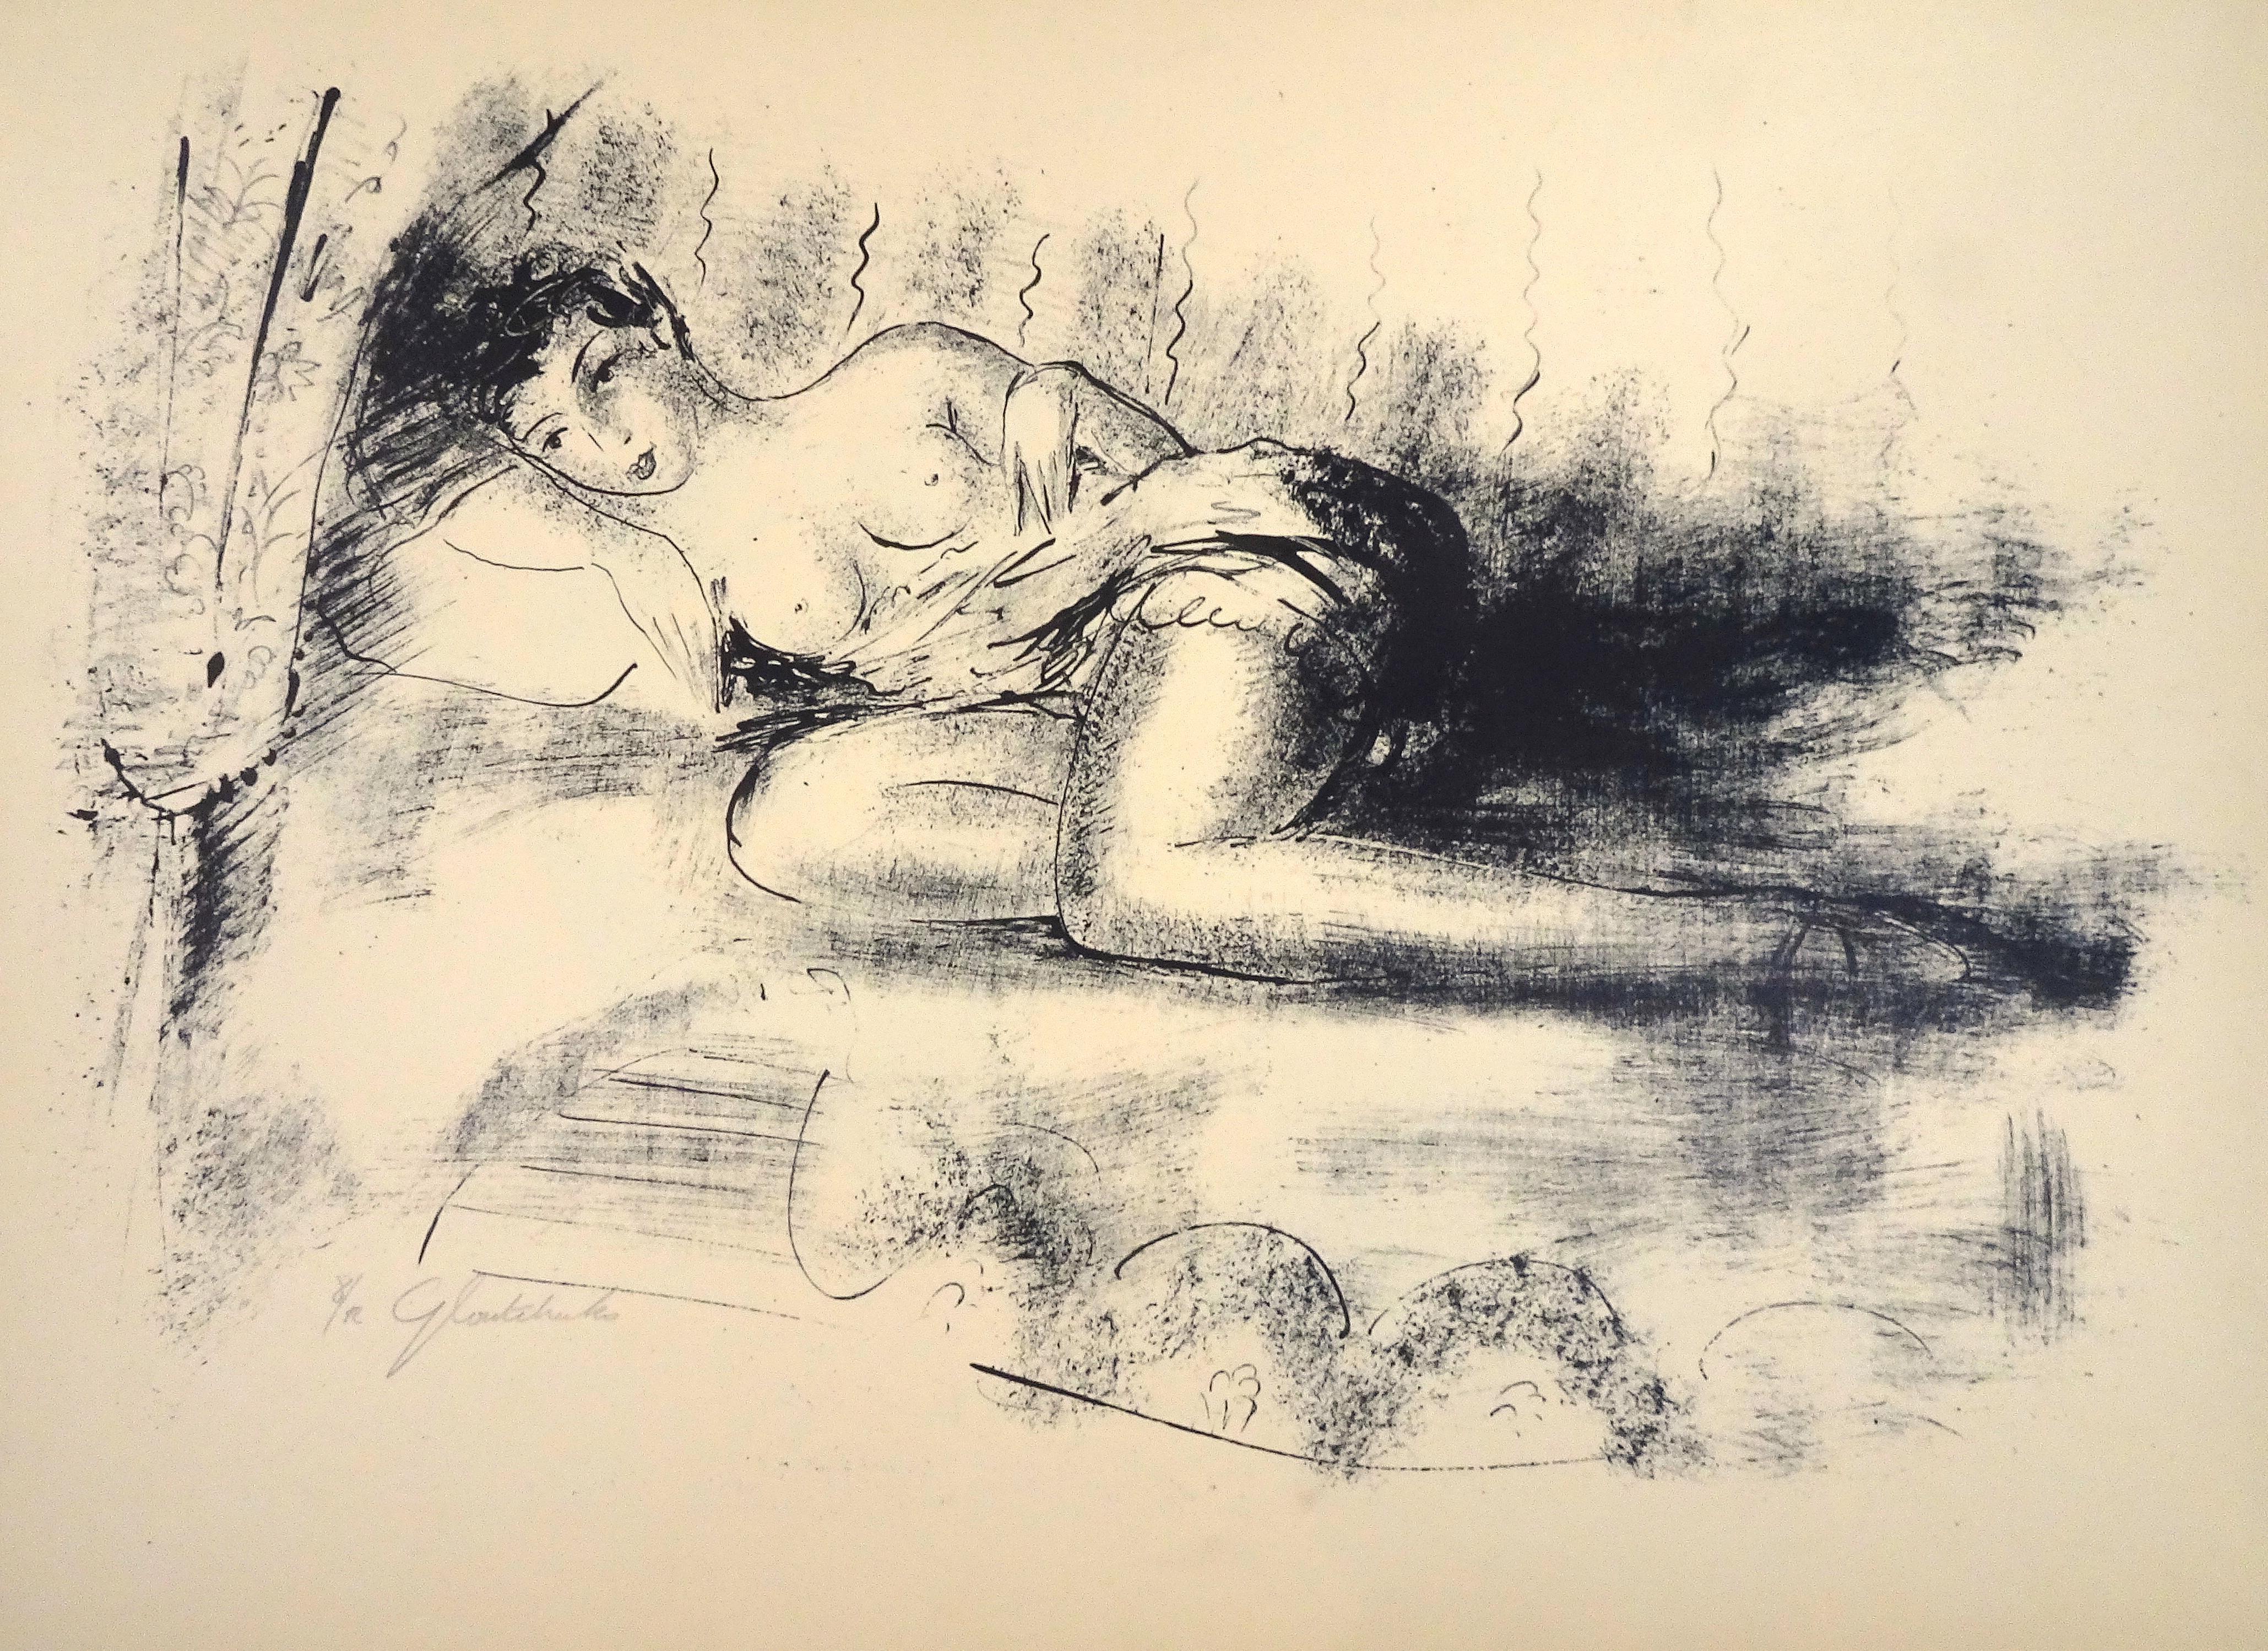 Nicolas Gloutchenko Nude Print - Female Nude - Original Lithograph on Japon Paper by N. Gloutchenko - 1928